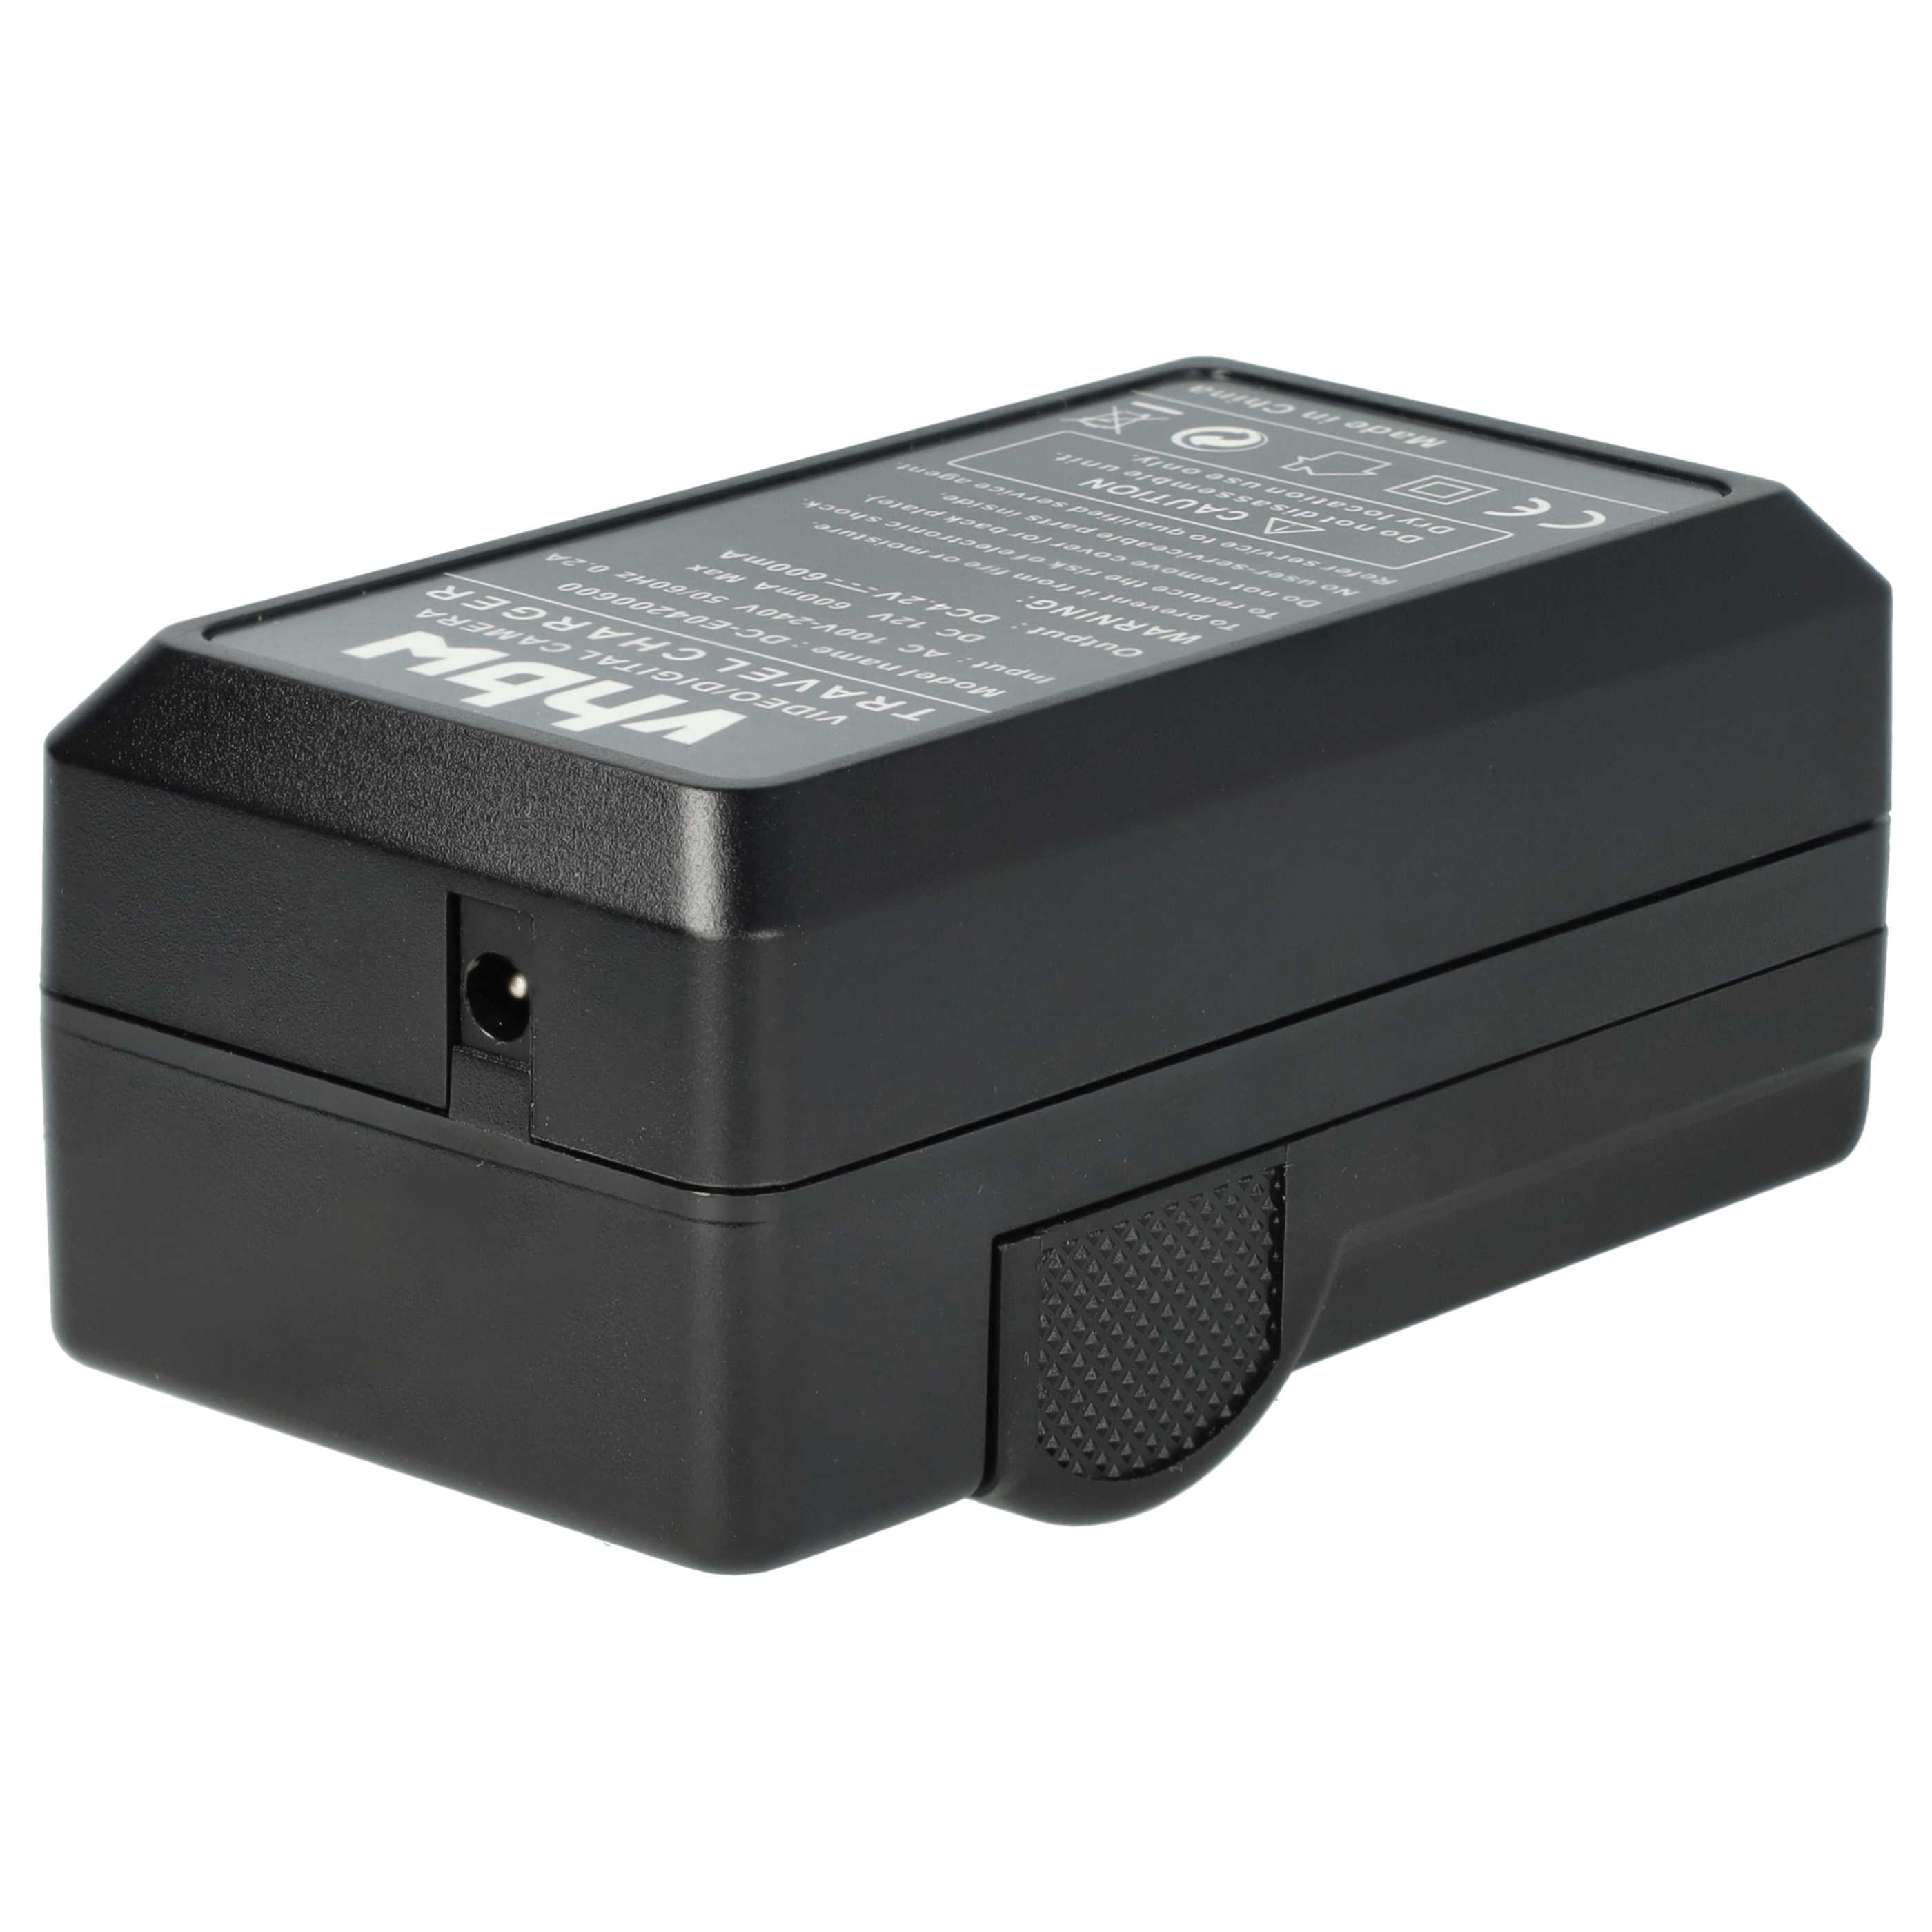 Akku Ladegerät passend für Casio NP-90 Kamera u.a. - 0,6 A, 4,2 V